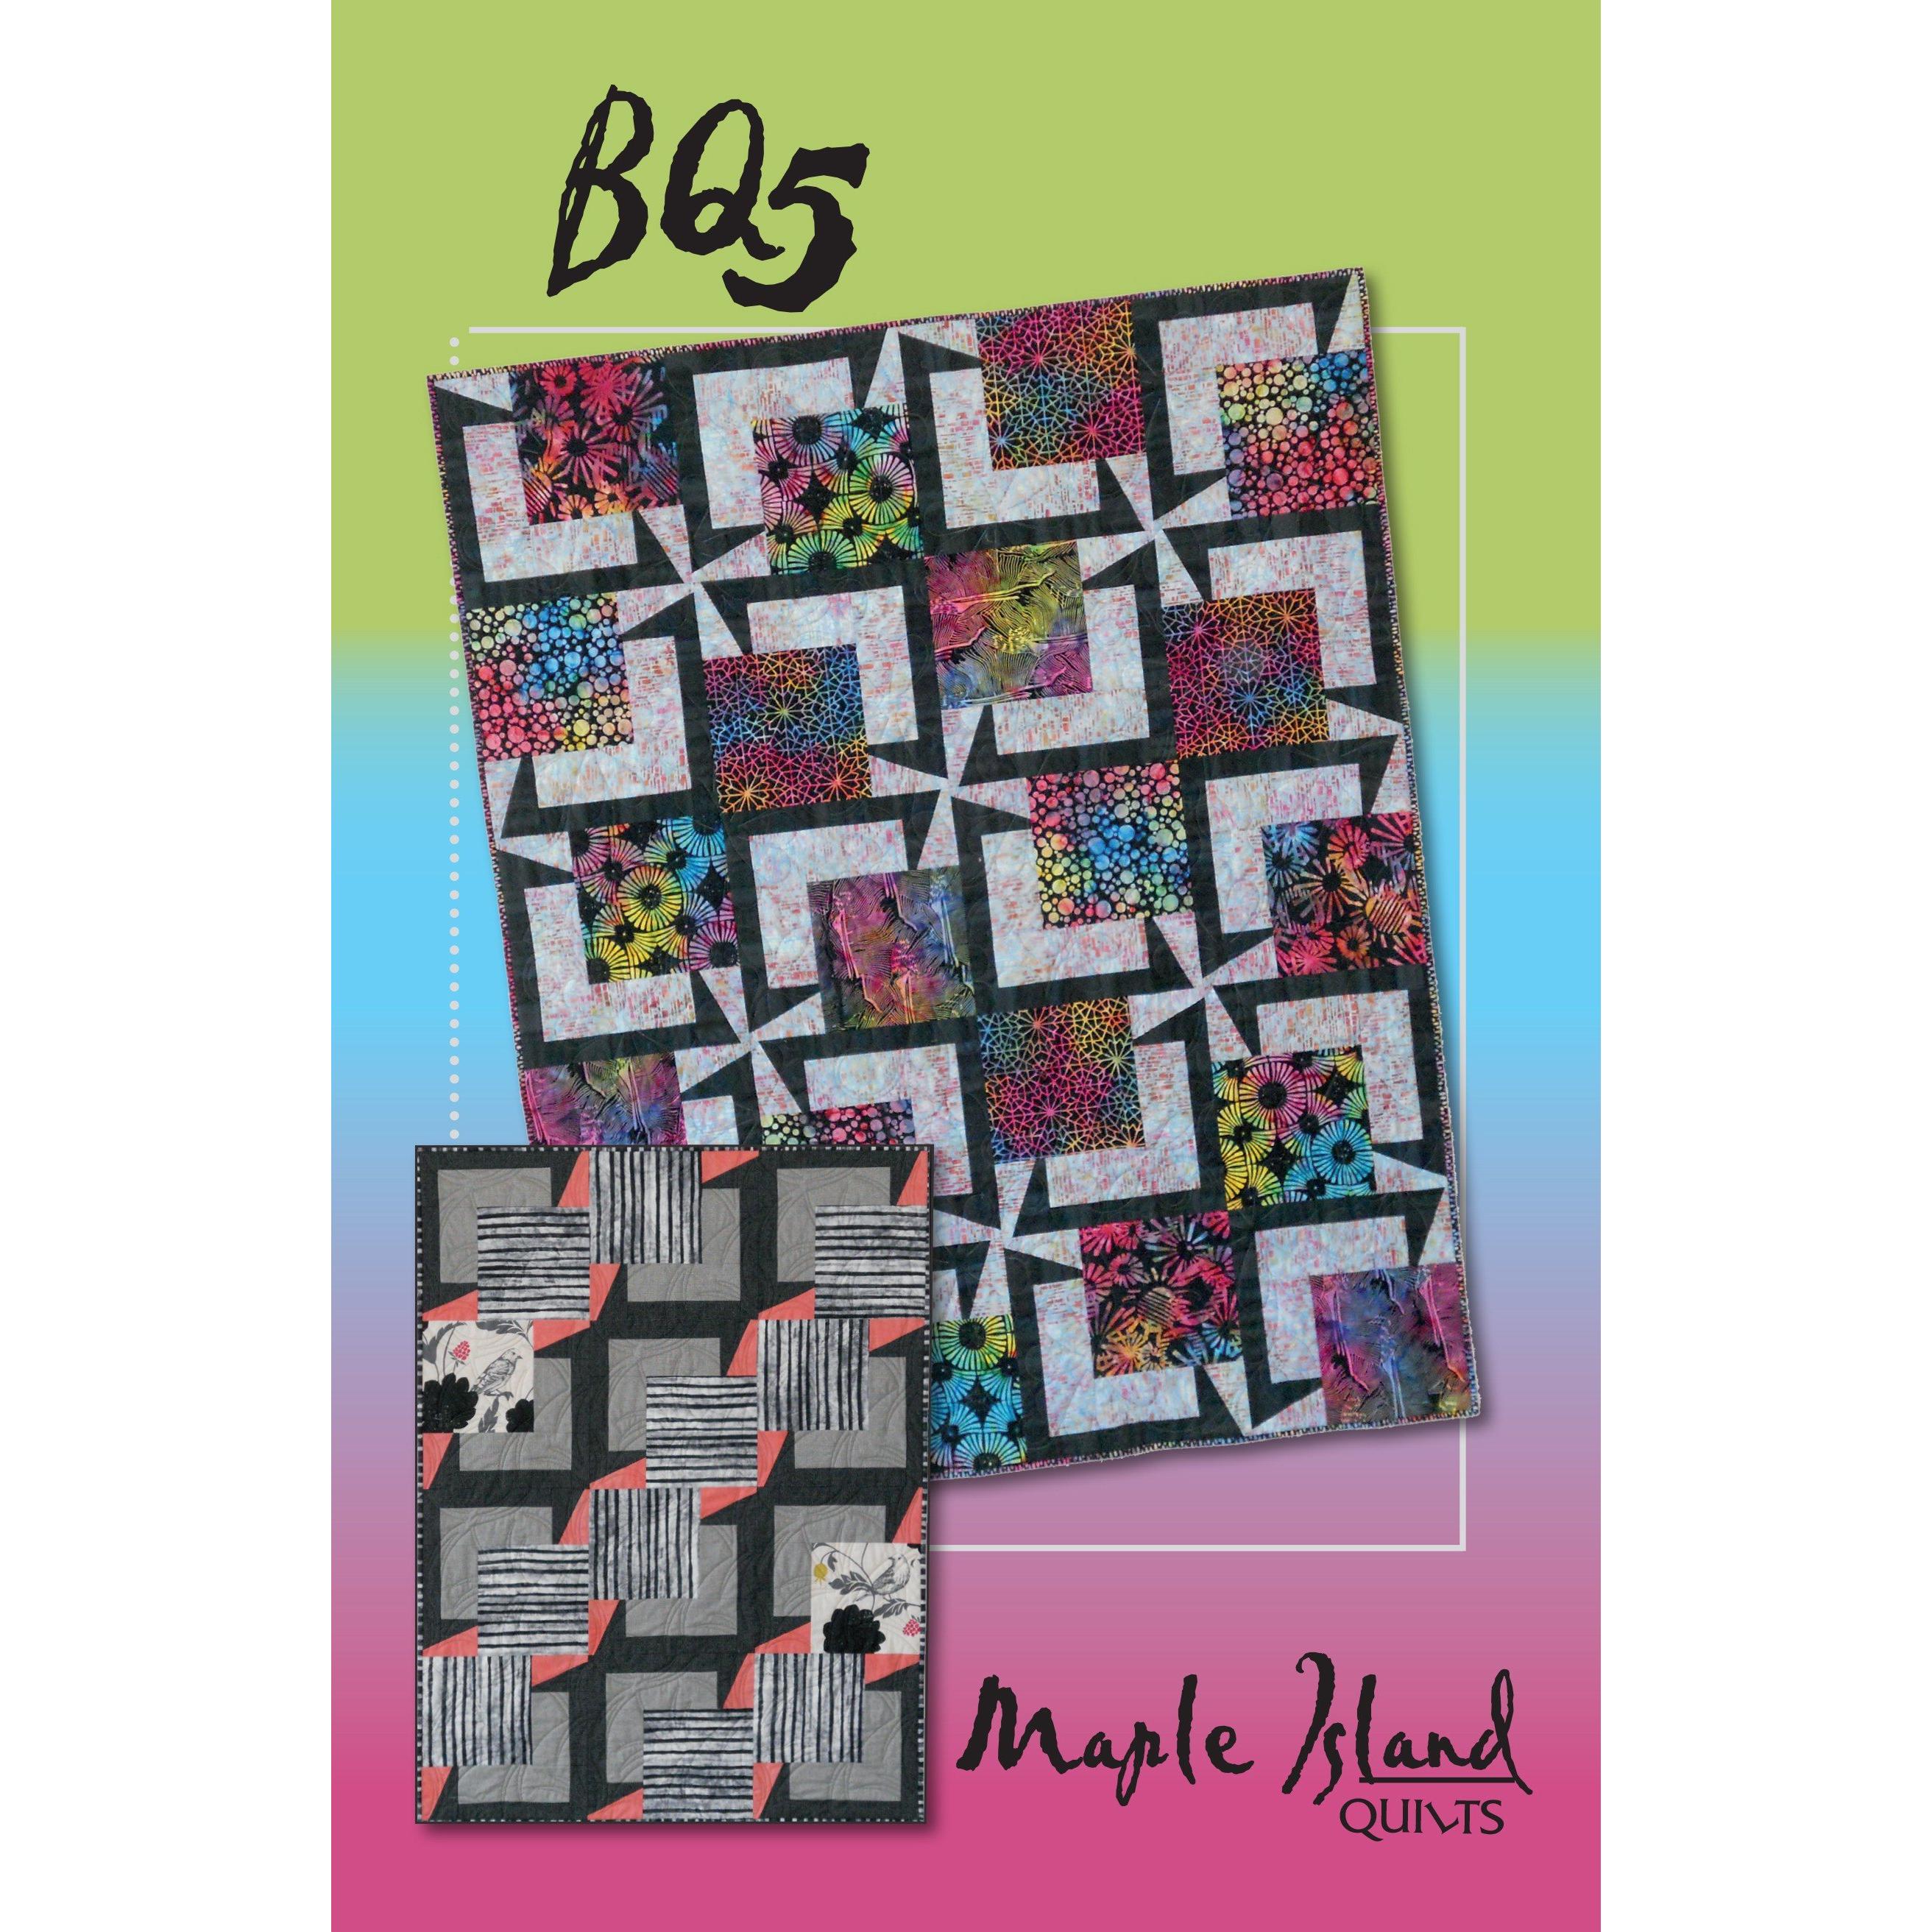 BQ5 Quilt Pattern-Maple Island Quilts-My Favorite Quilt Store